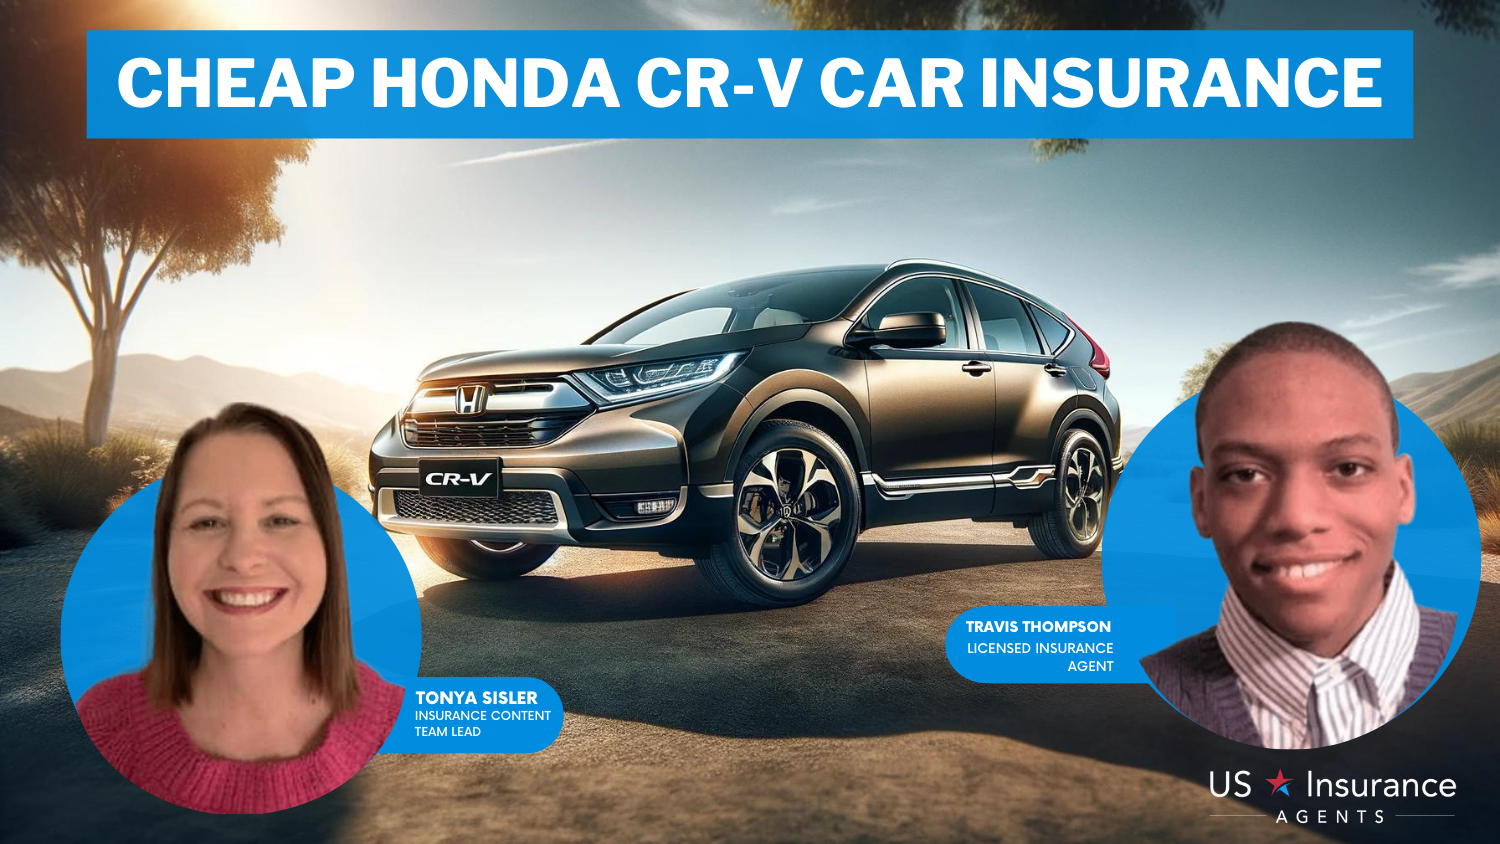 Cheap Honda CR-V Car Insurance: Progressive, Allstate, and Liberty Mutual